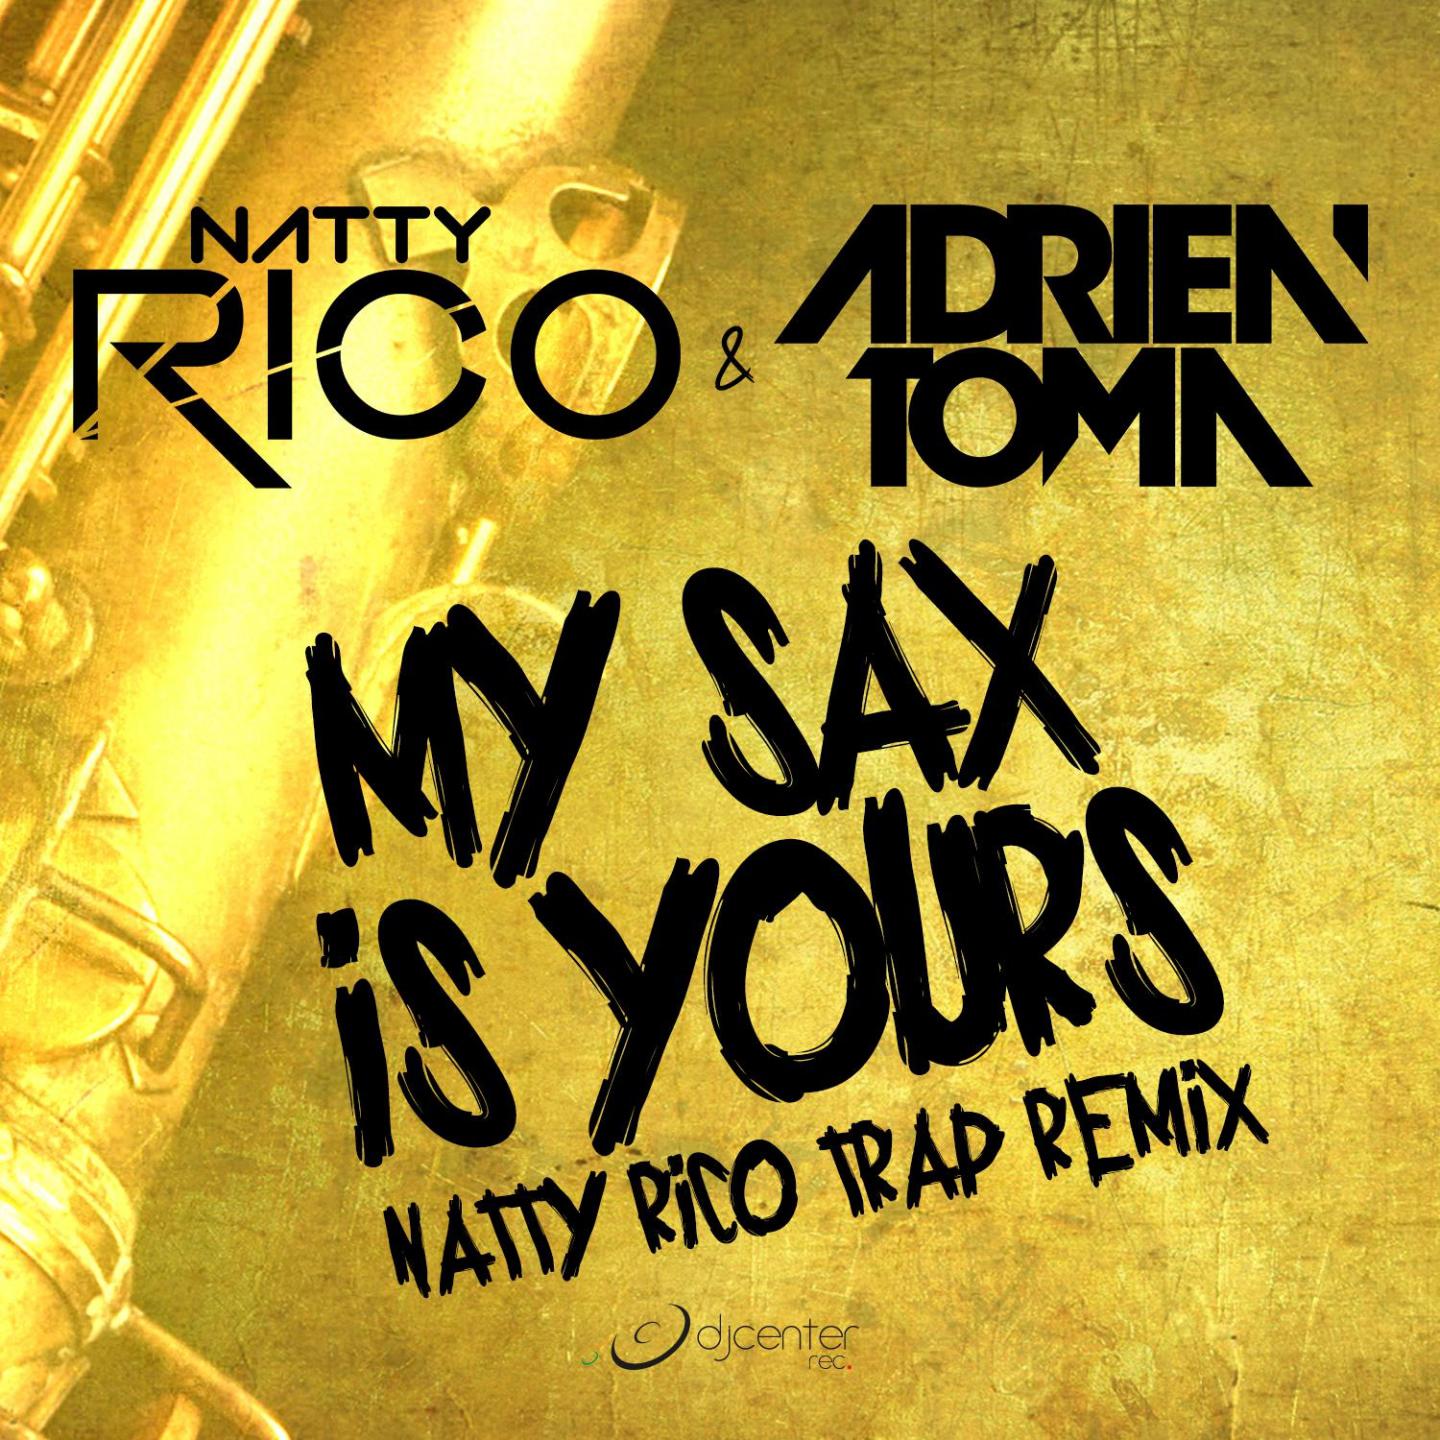 Natty Rico - My Sax Is Yours (Natty Rico Trap Remix)